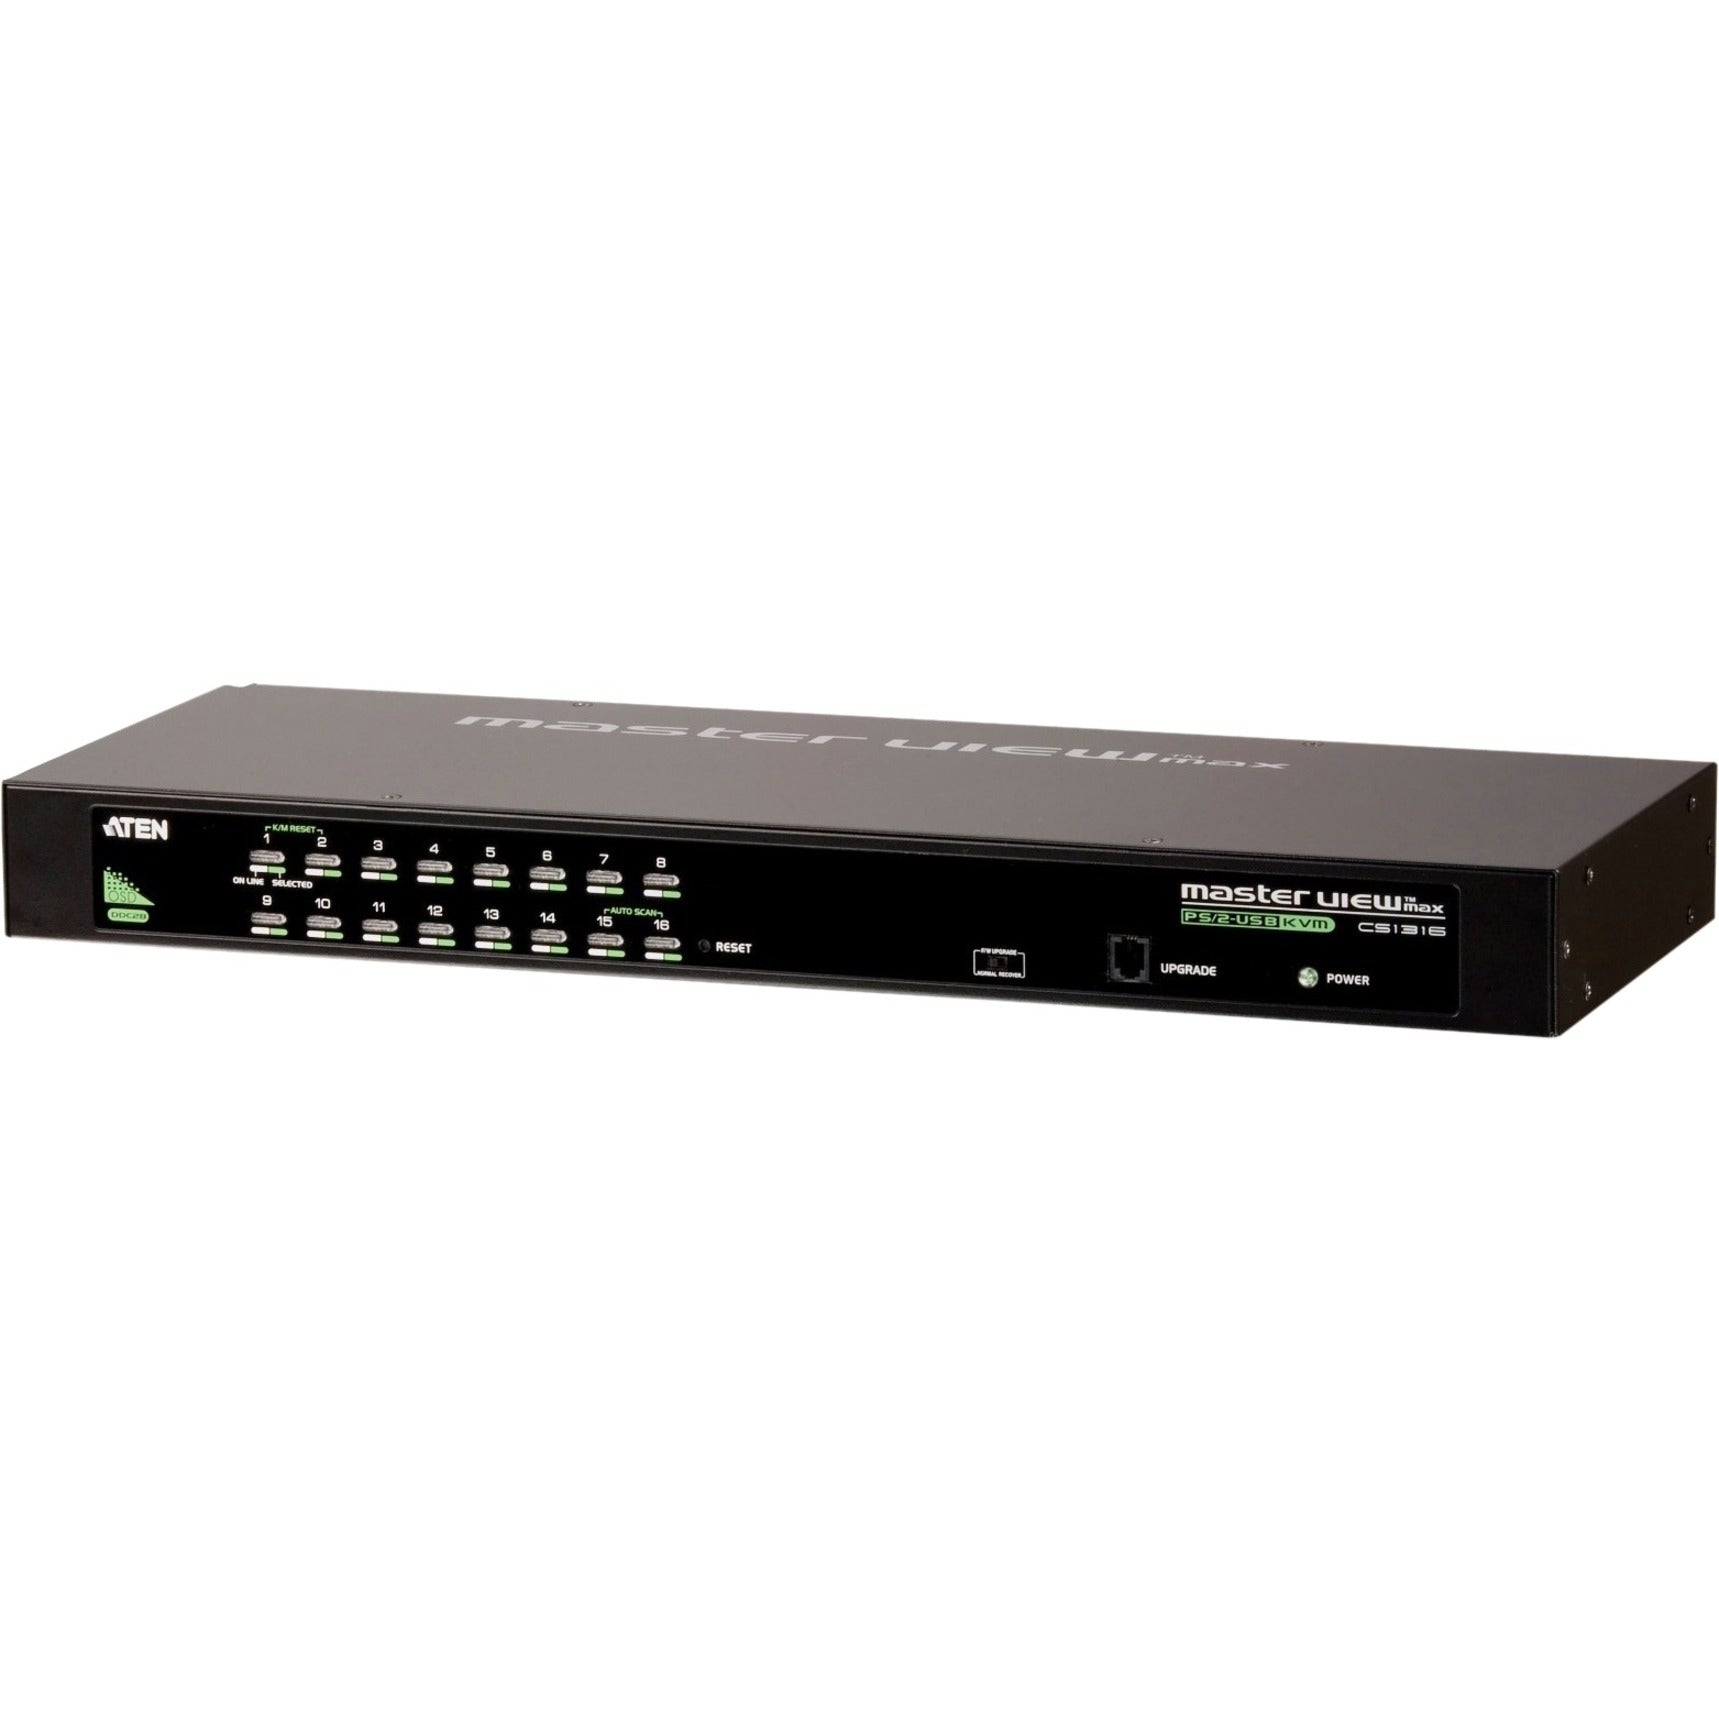 HPE Q1F46A CS1316 G2 0x1x16 Analog KVM Switch for HPE Servers, 16 VGA Ports, 3 USB Ports